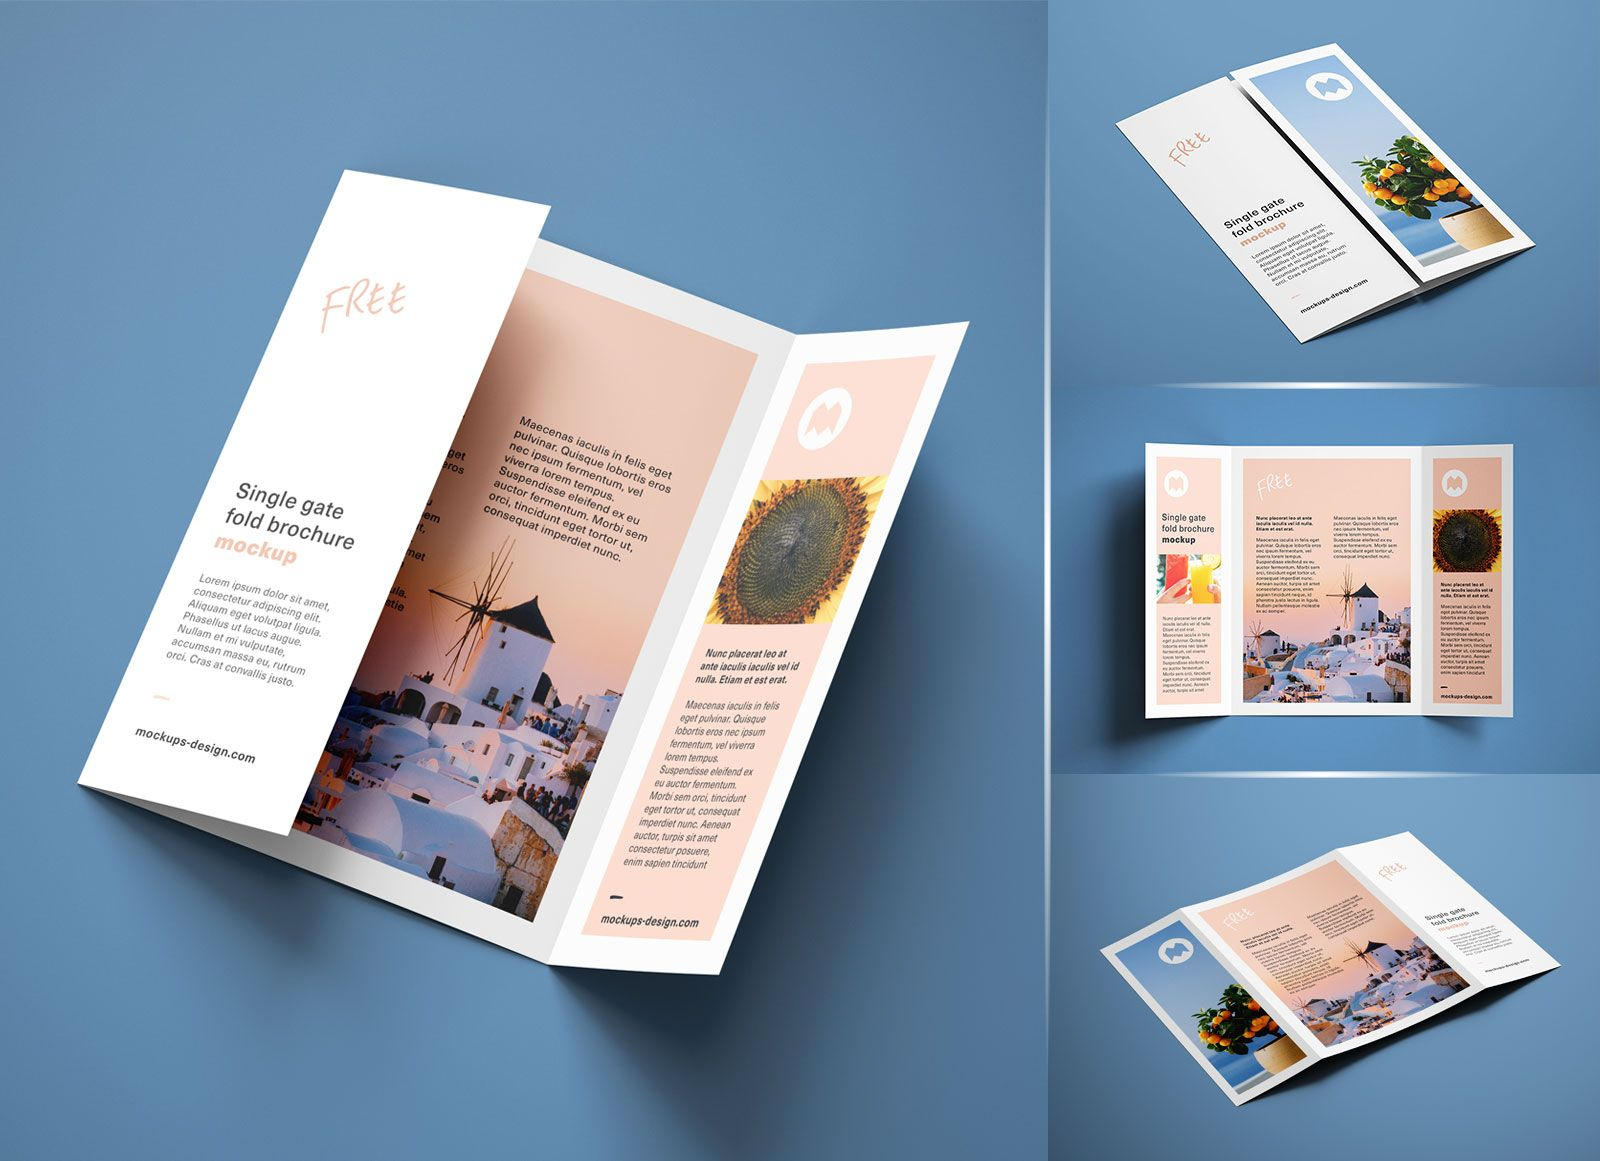 Free A4 Single Gate Fold Brochure Mockup Psd Set | Free With Regard To Single Page Brochure Templates Psd